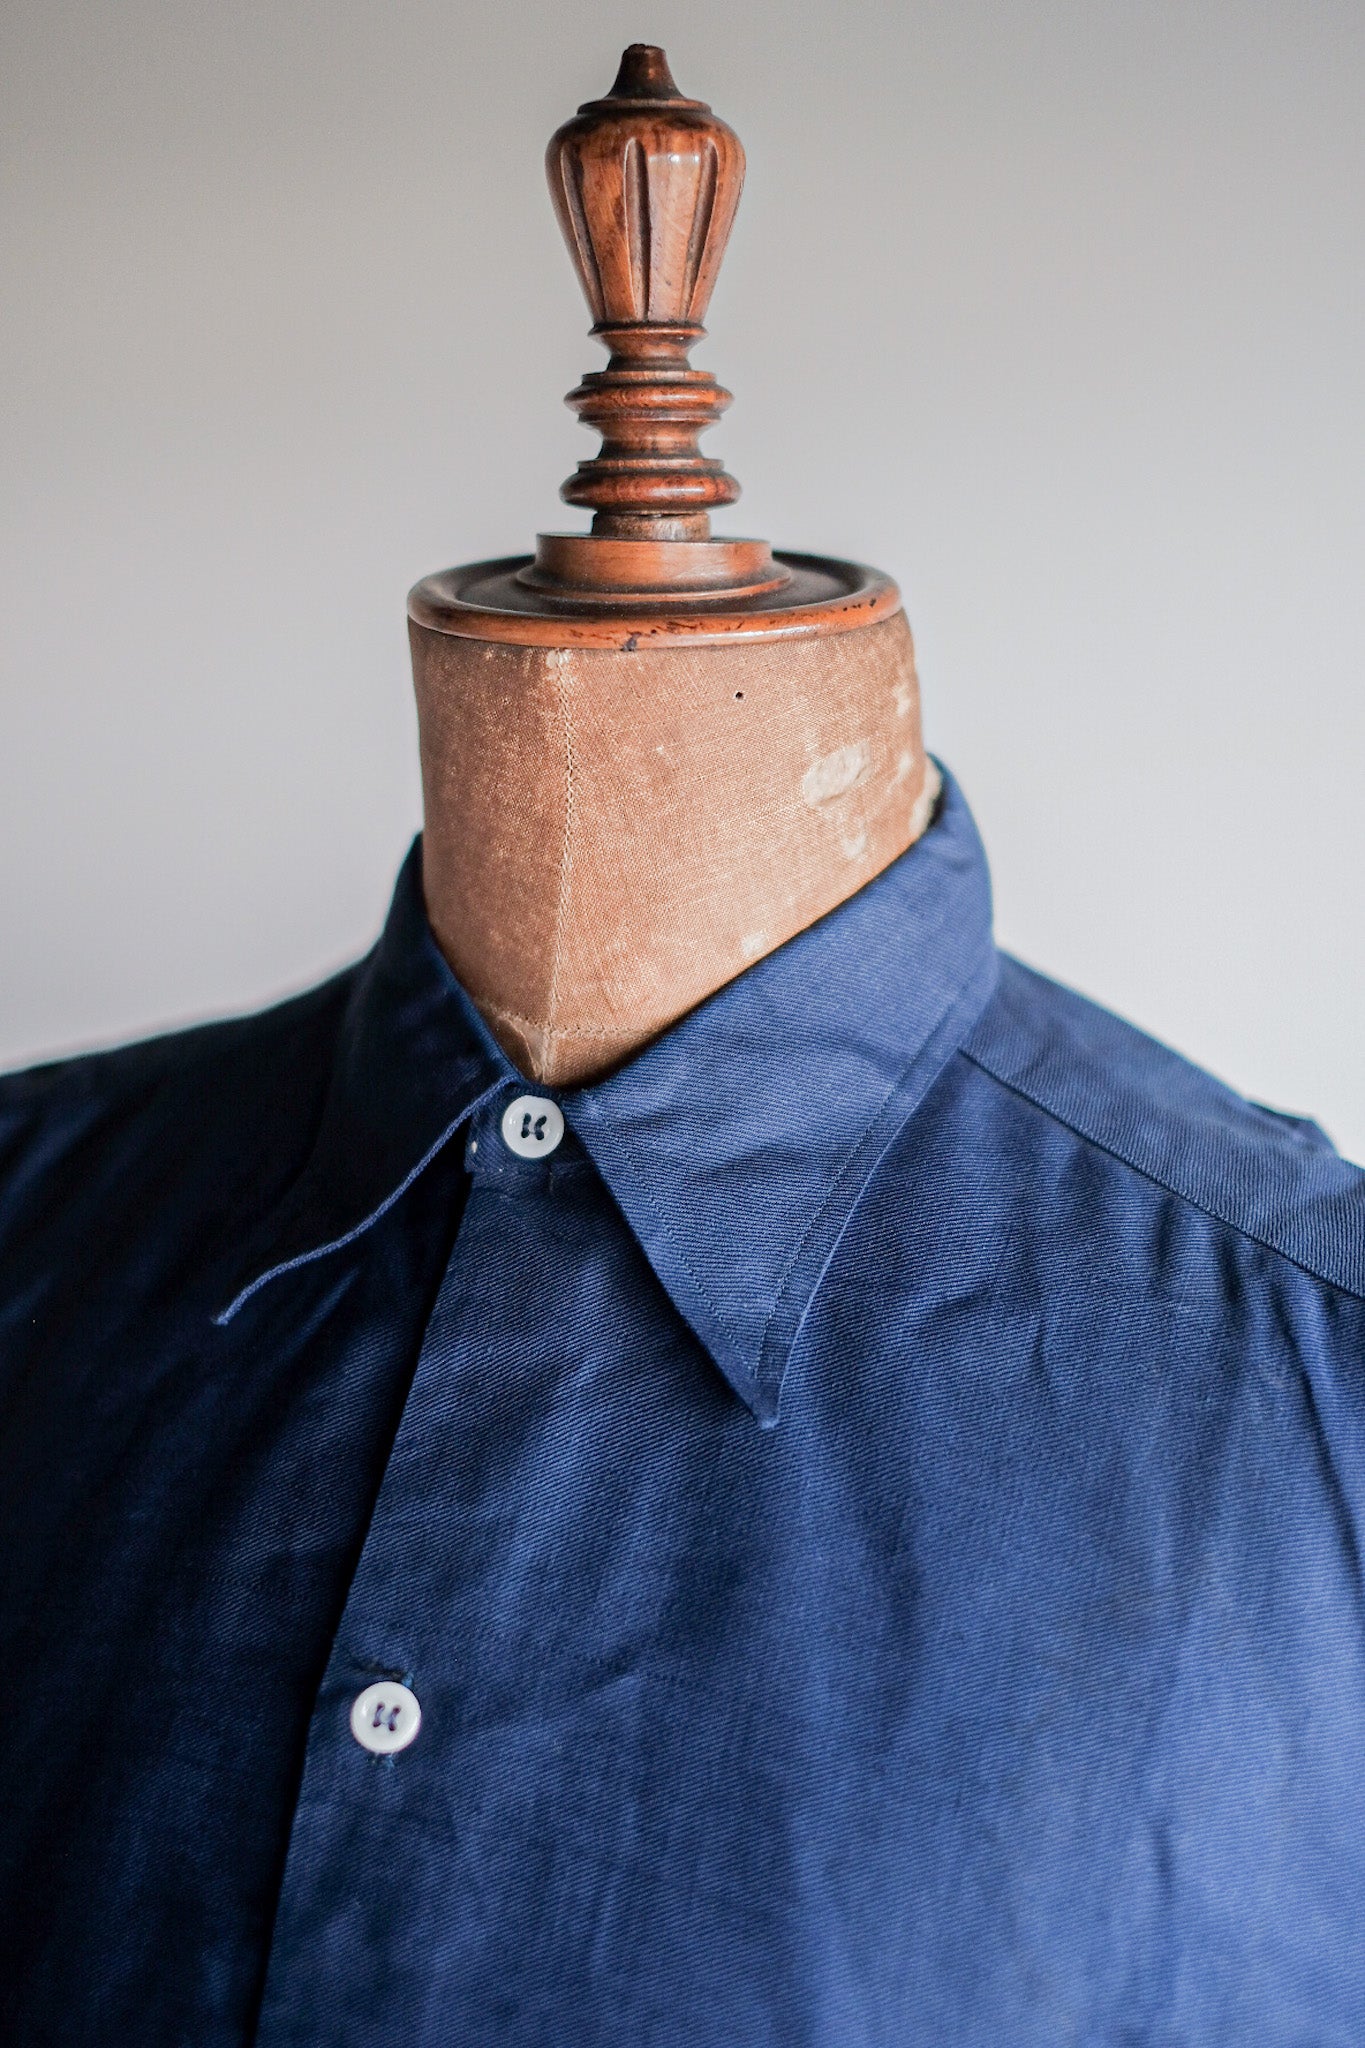 [~ 40's] French Vintage Indigo Metis Grandpa Shirt "Dead Stock"